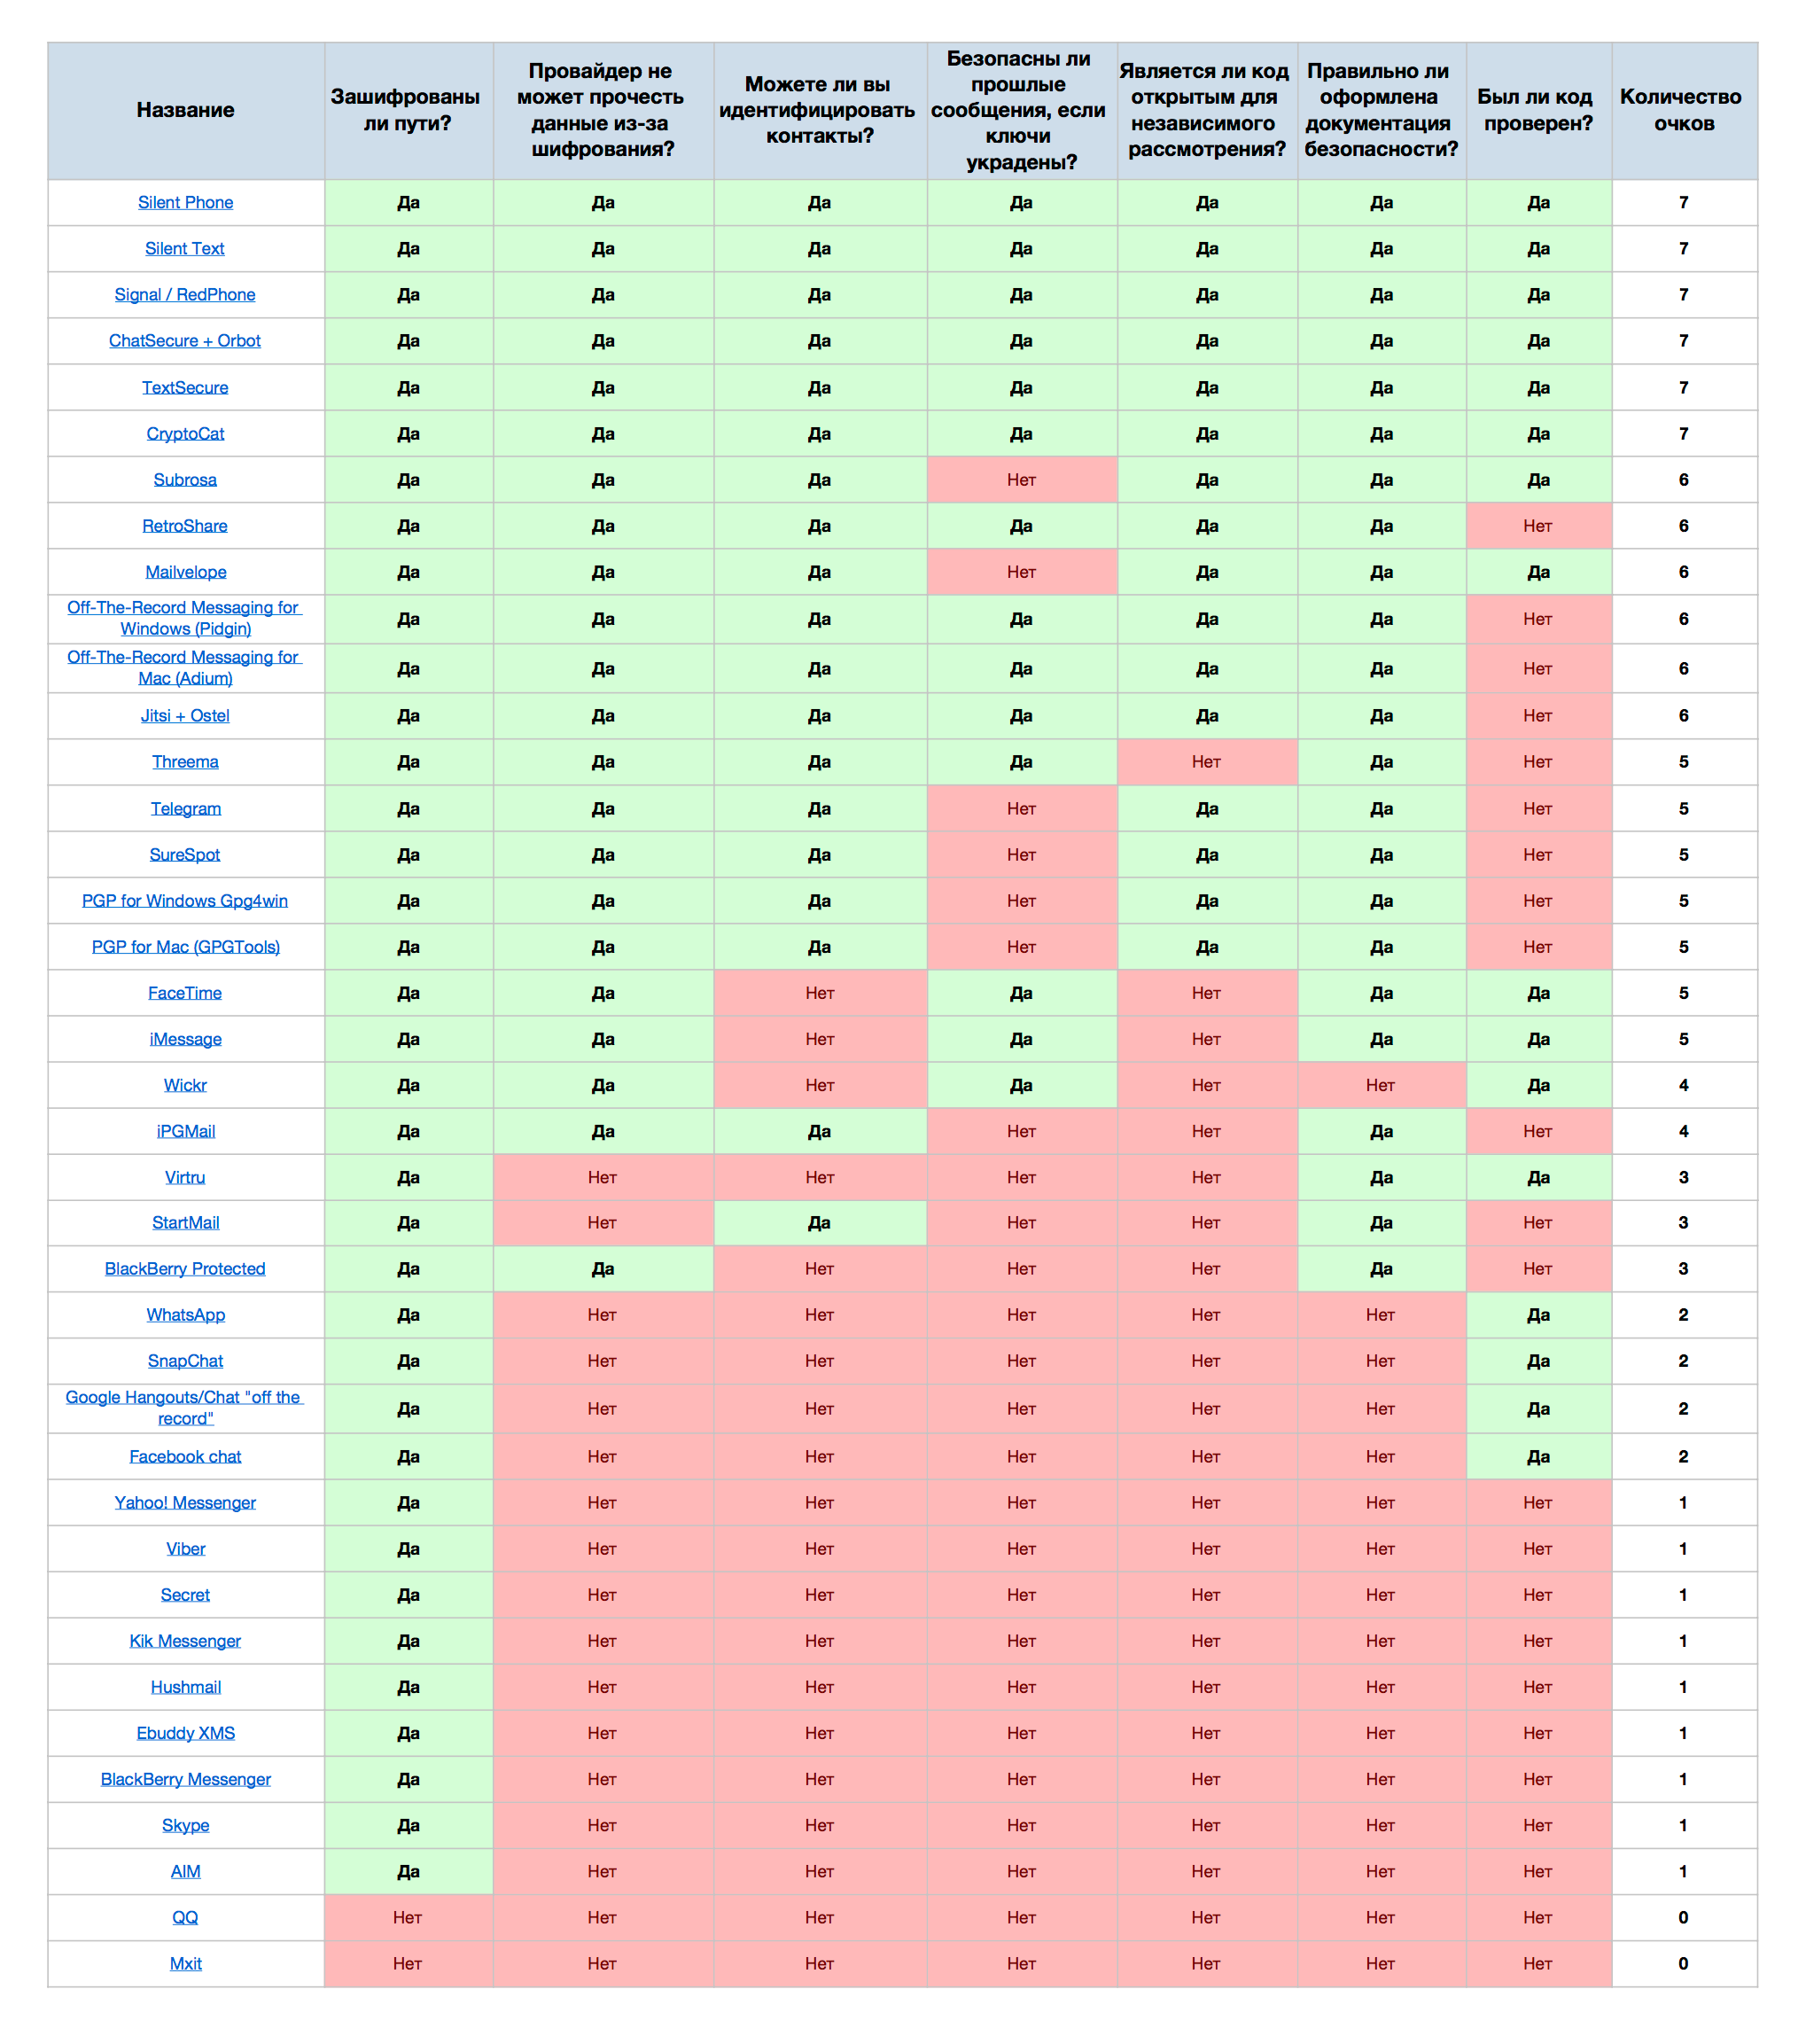 Таблица безопасности мессенджеров. Сравнение мессенджеров таблица. Сравнительная характеристика мессенджеров. Таблица сравнения мессенджеров 2021.